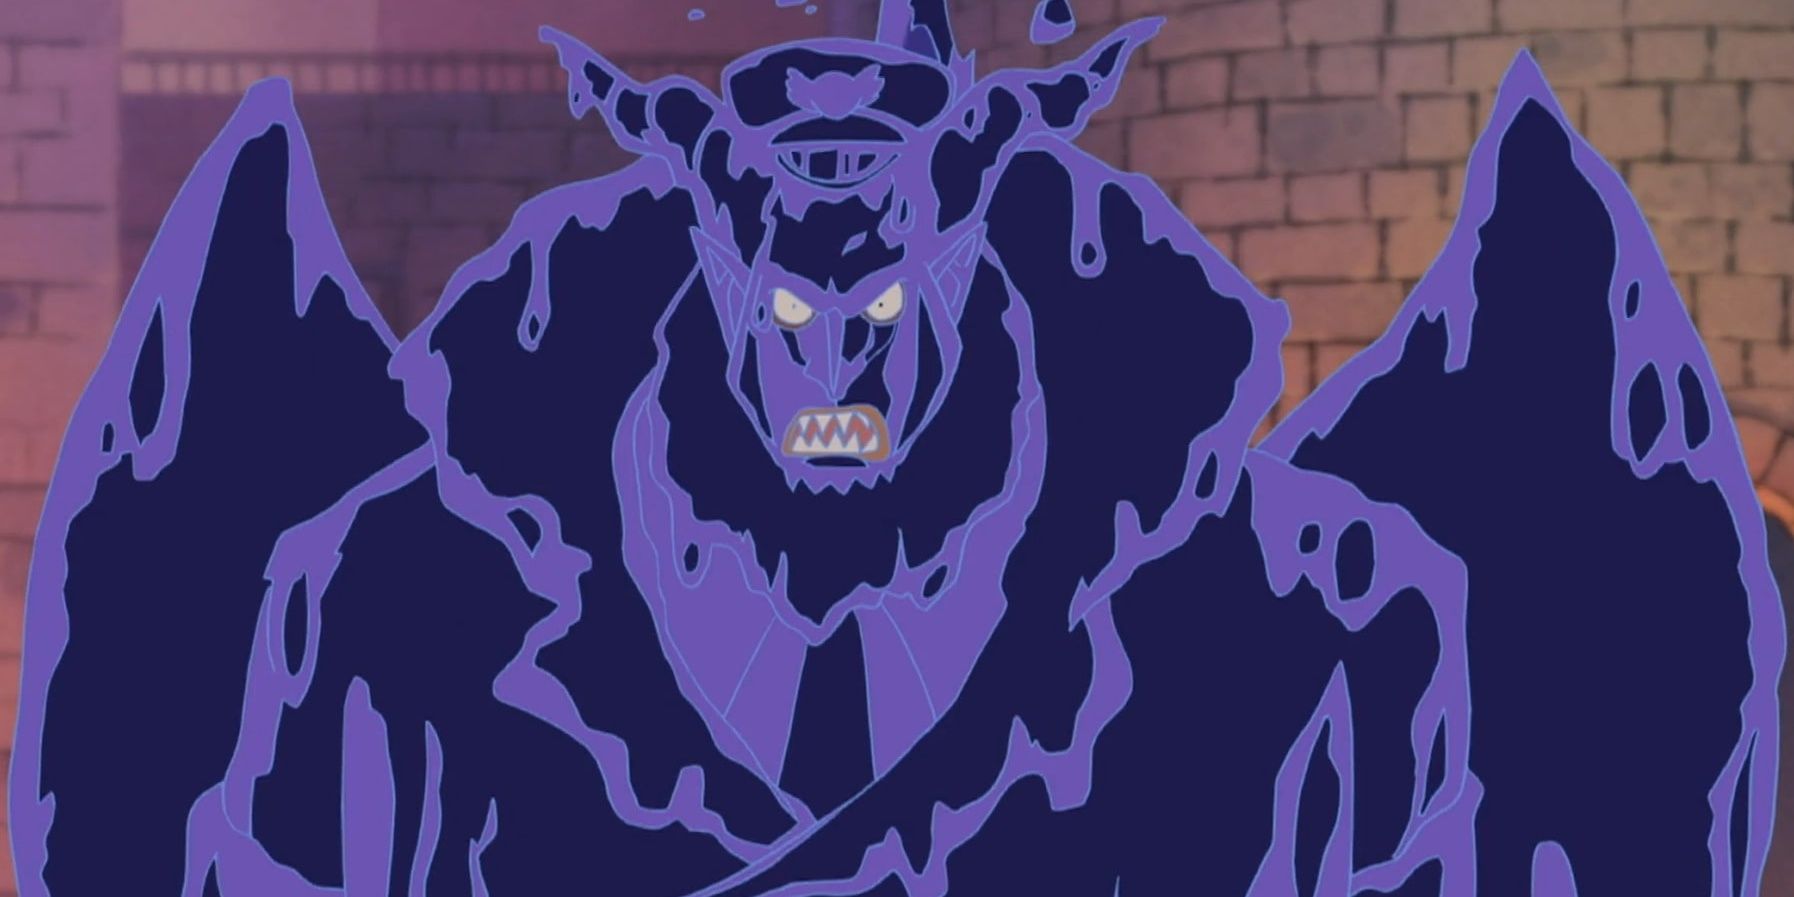 Magellan uses his Venom-Venom fruit to coat his body in poison in One Piece.